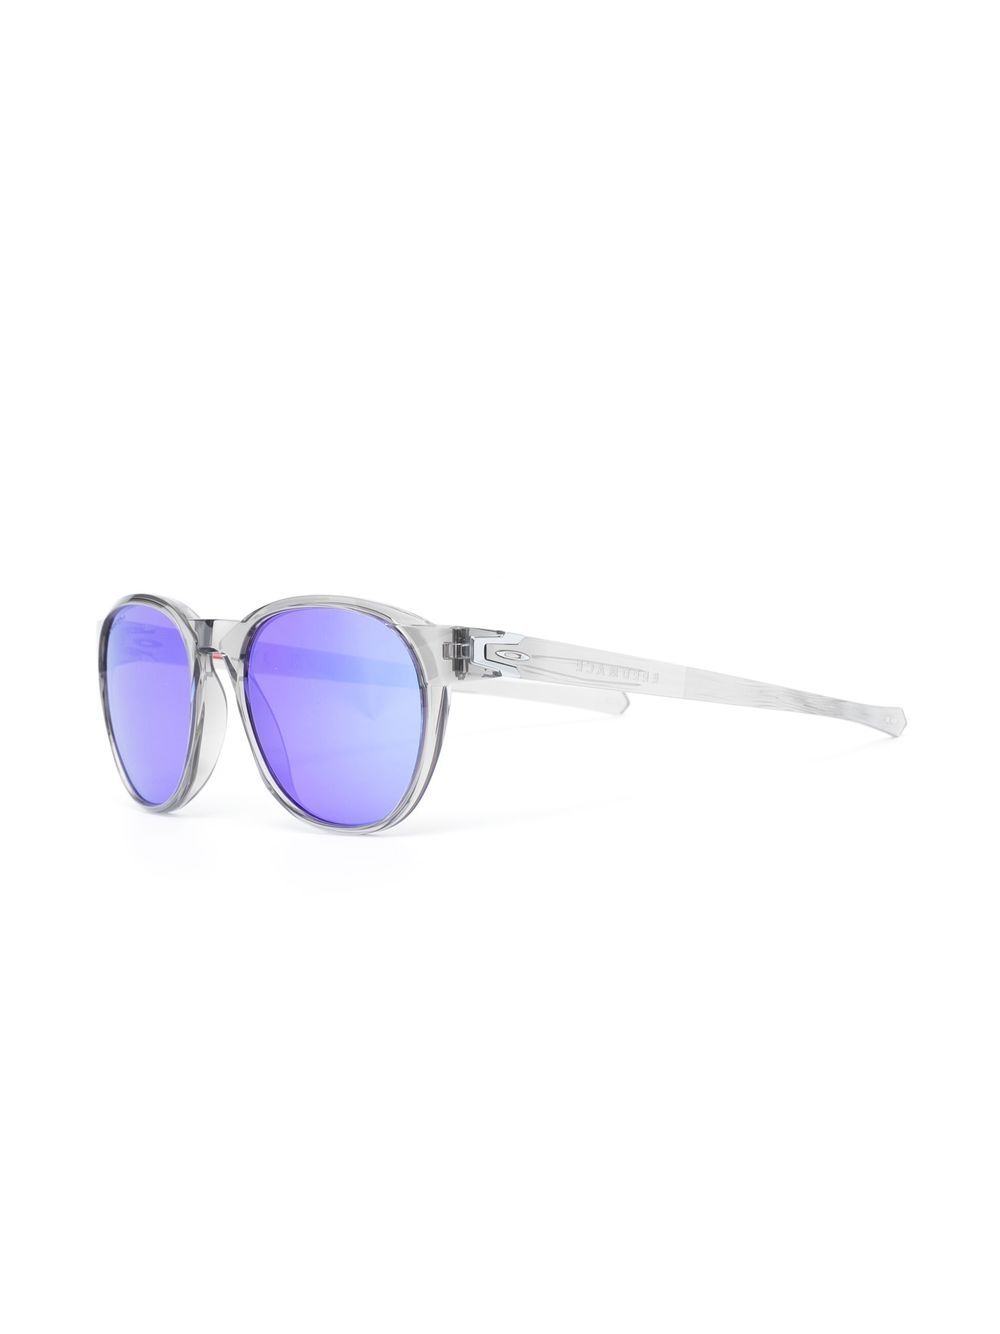 Mirrored-lenses sunglasses